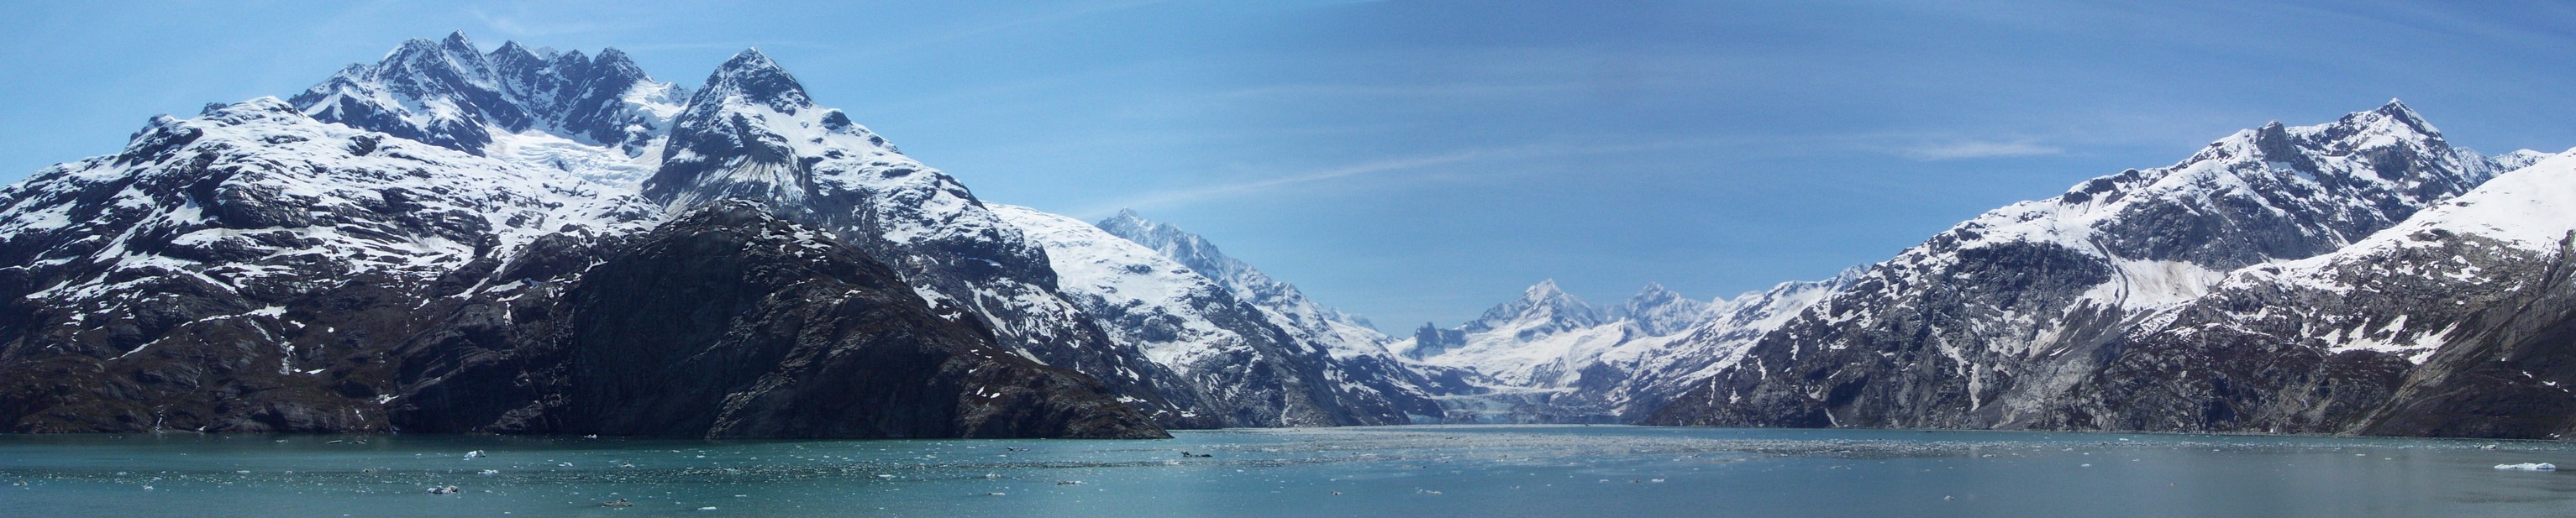 pano30_john_hopkins_glacier_panoramic_180.jpg